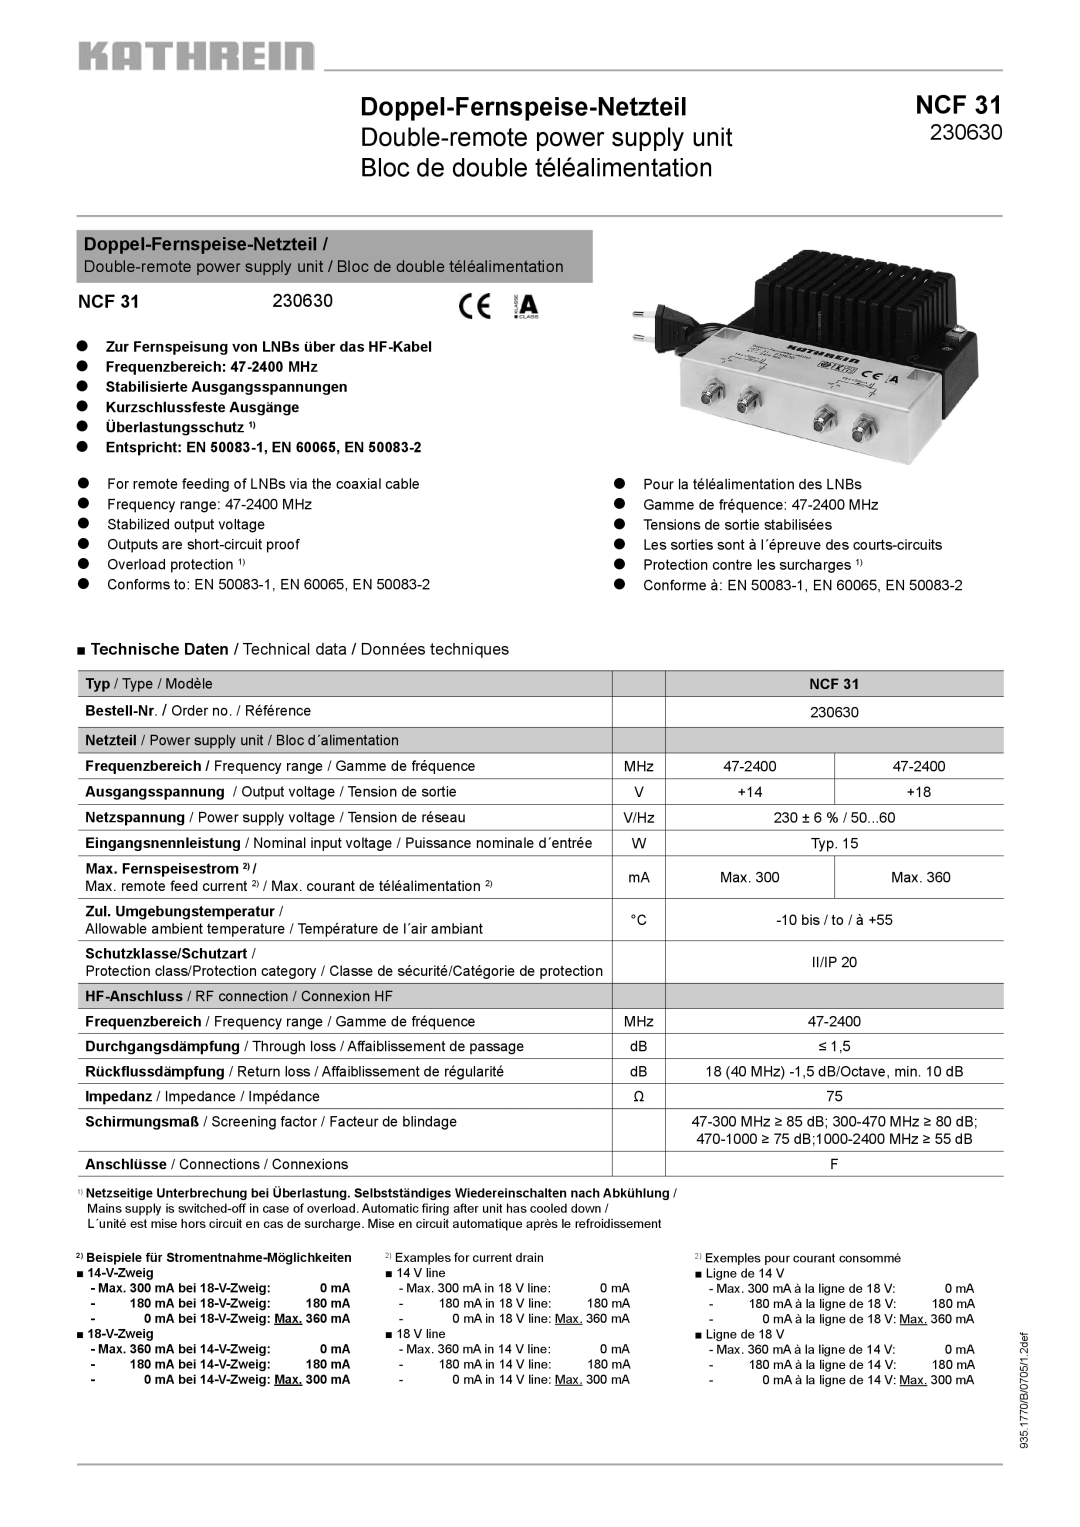 Kathrein NCF 31 manual Doppel-Fernspeise-Netzteil, Double-remotepower supply unit, Bloc de double téléalimentation, 230630 